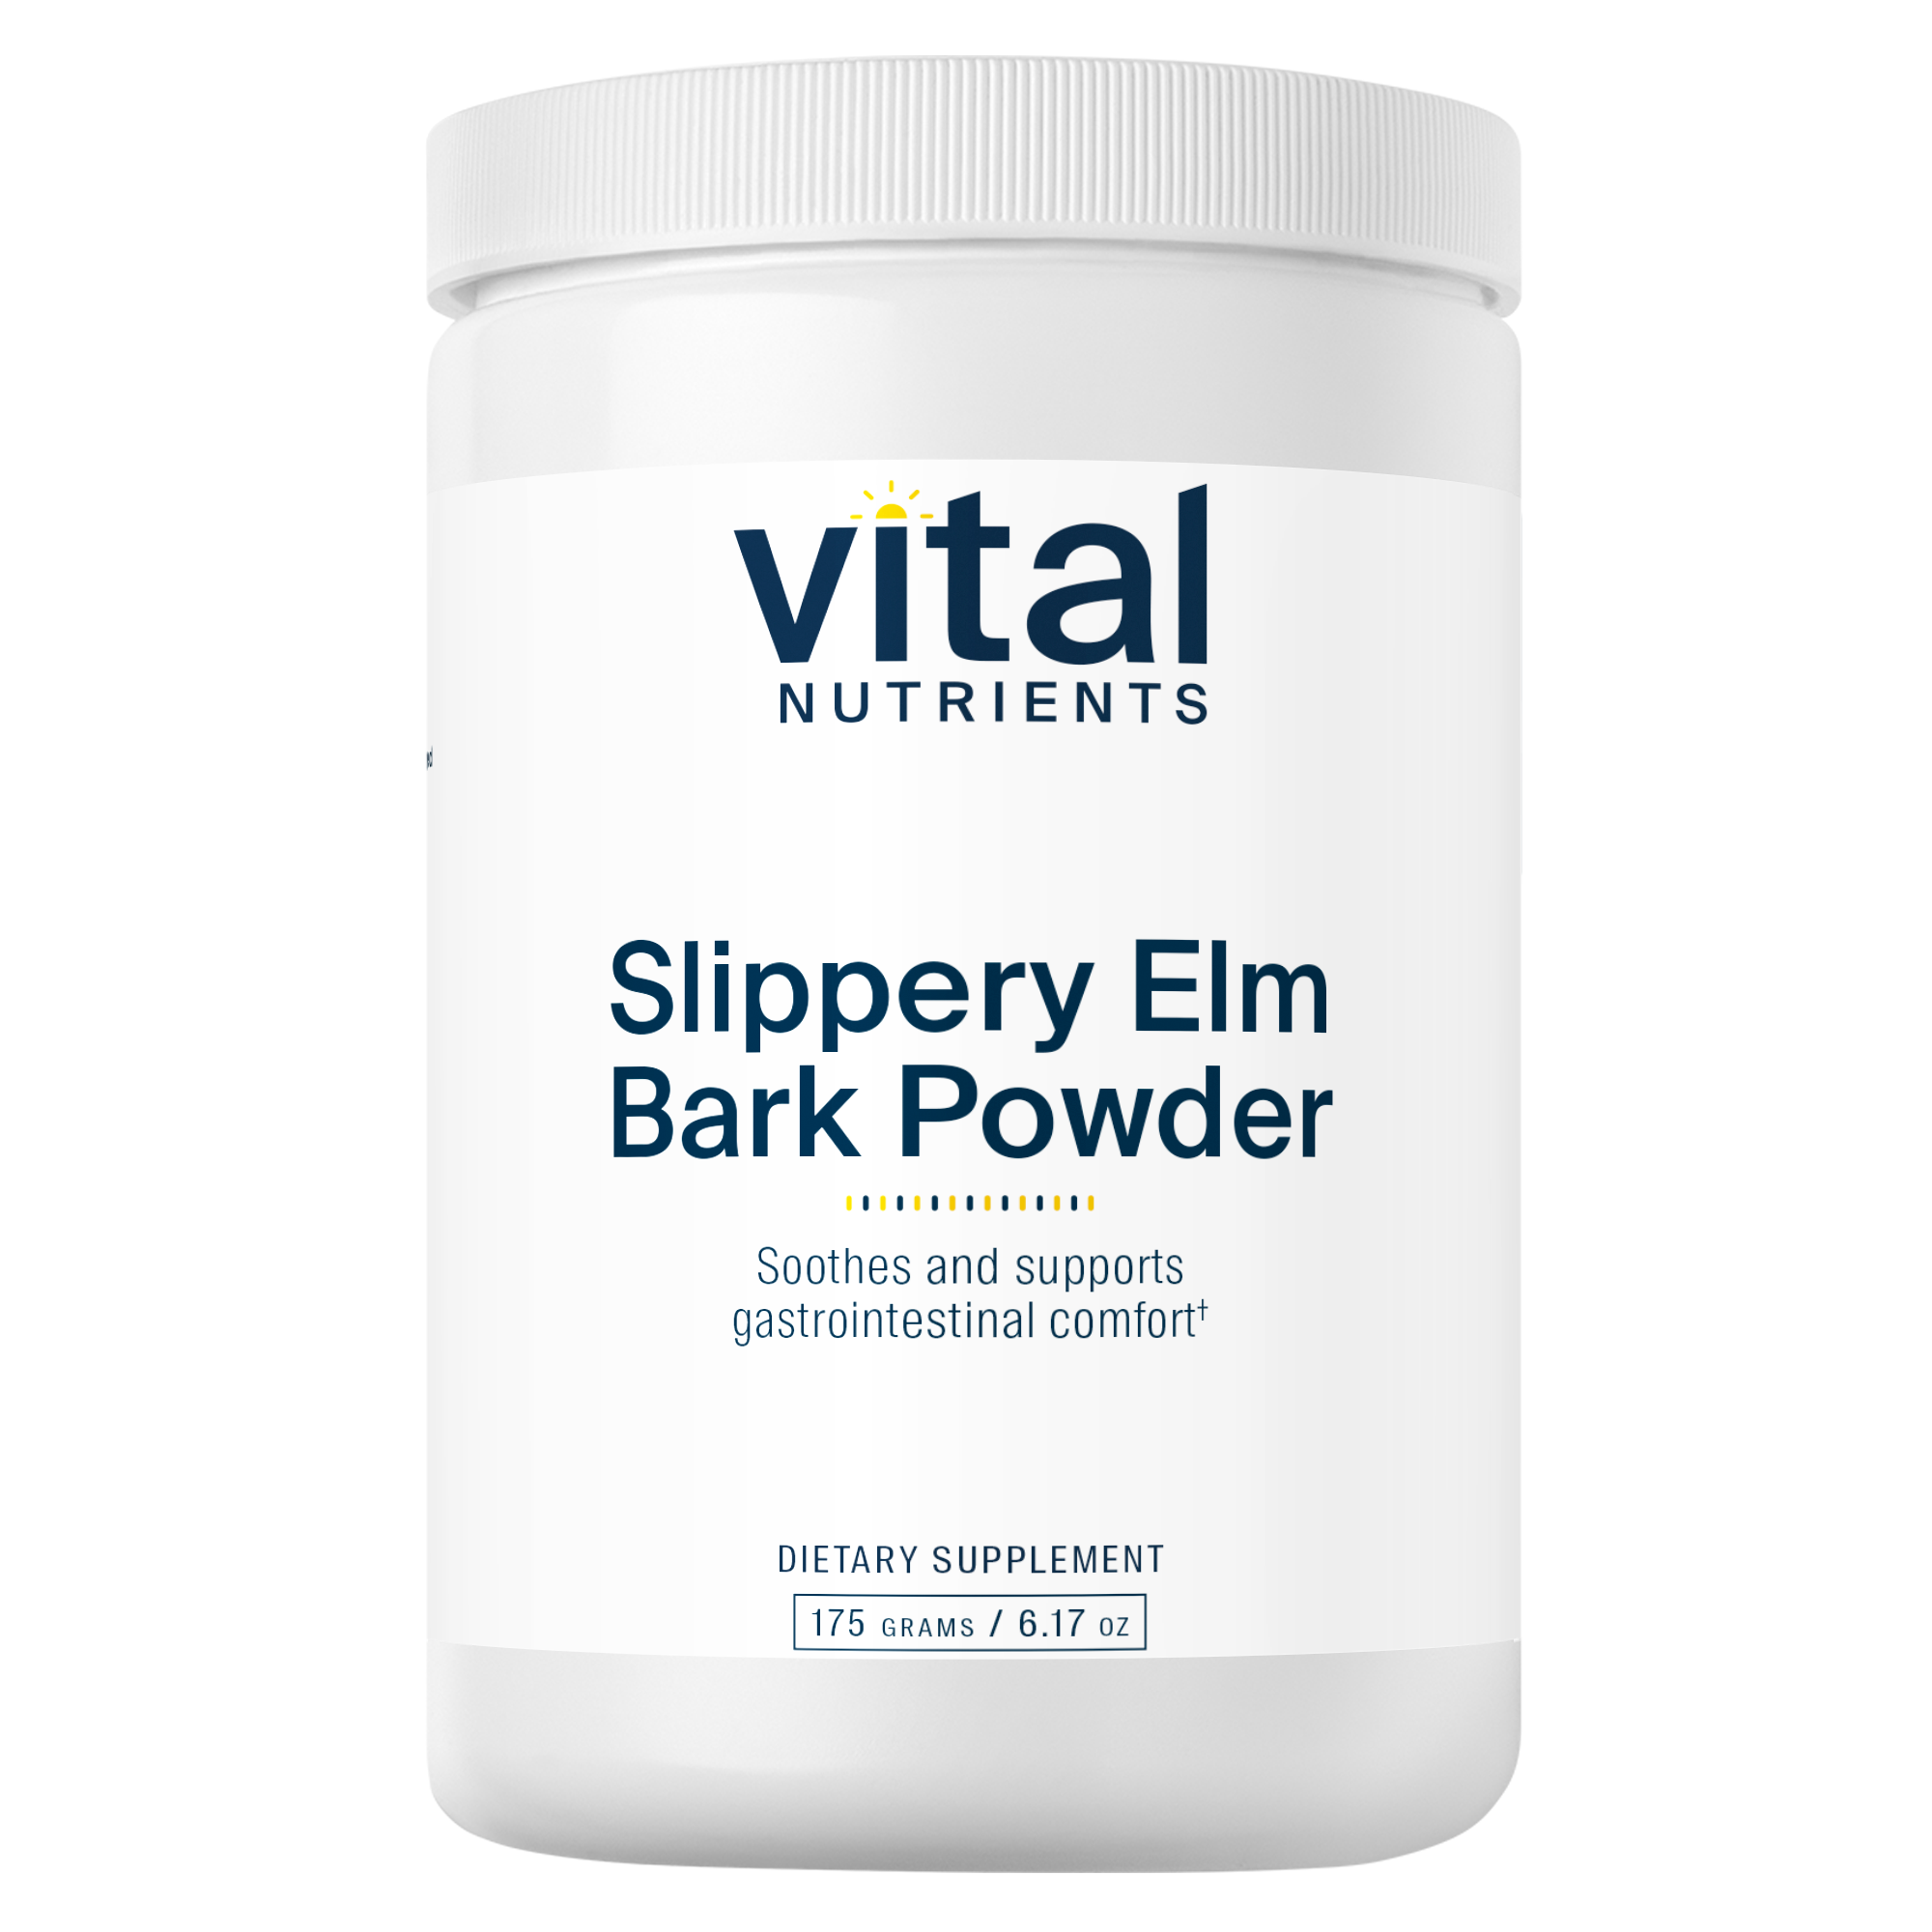 Slippery Elm Bark Powder